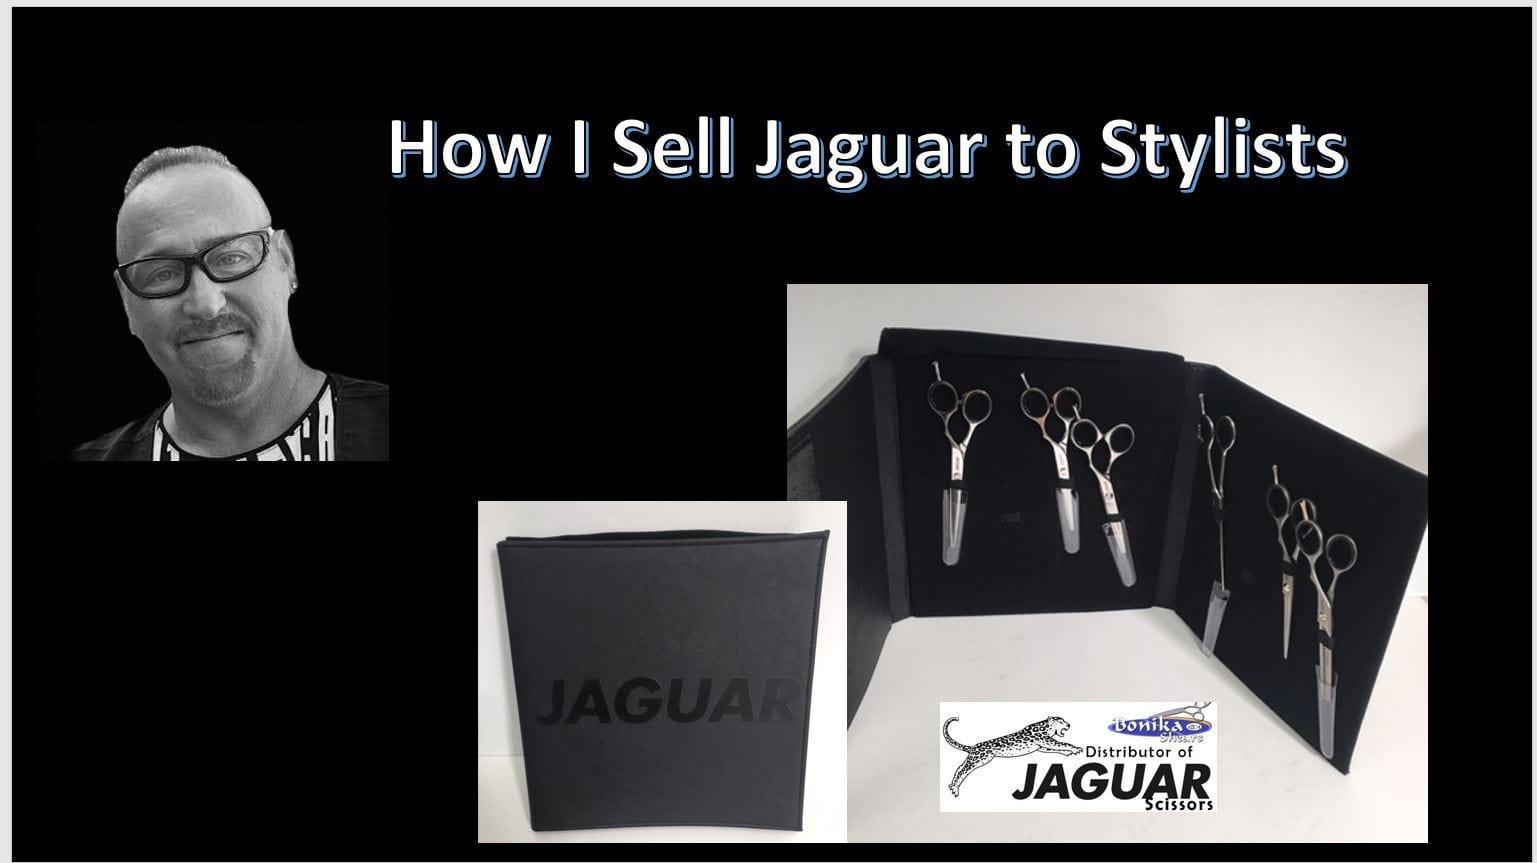 Jaguar Shears Marketing Material